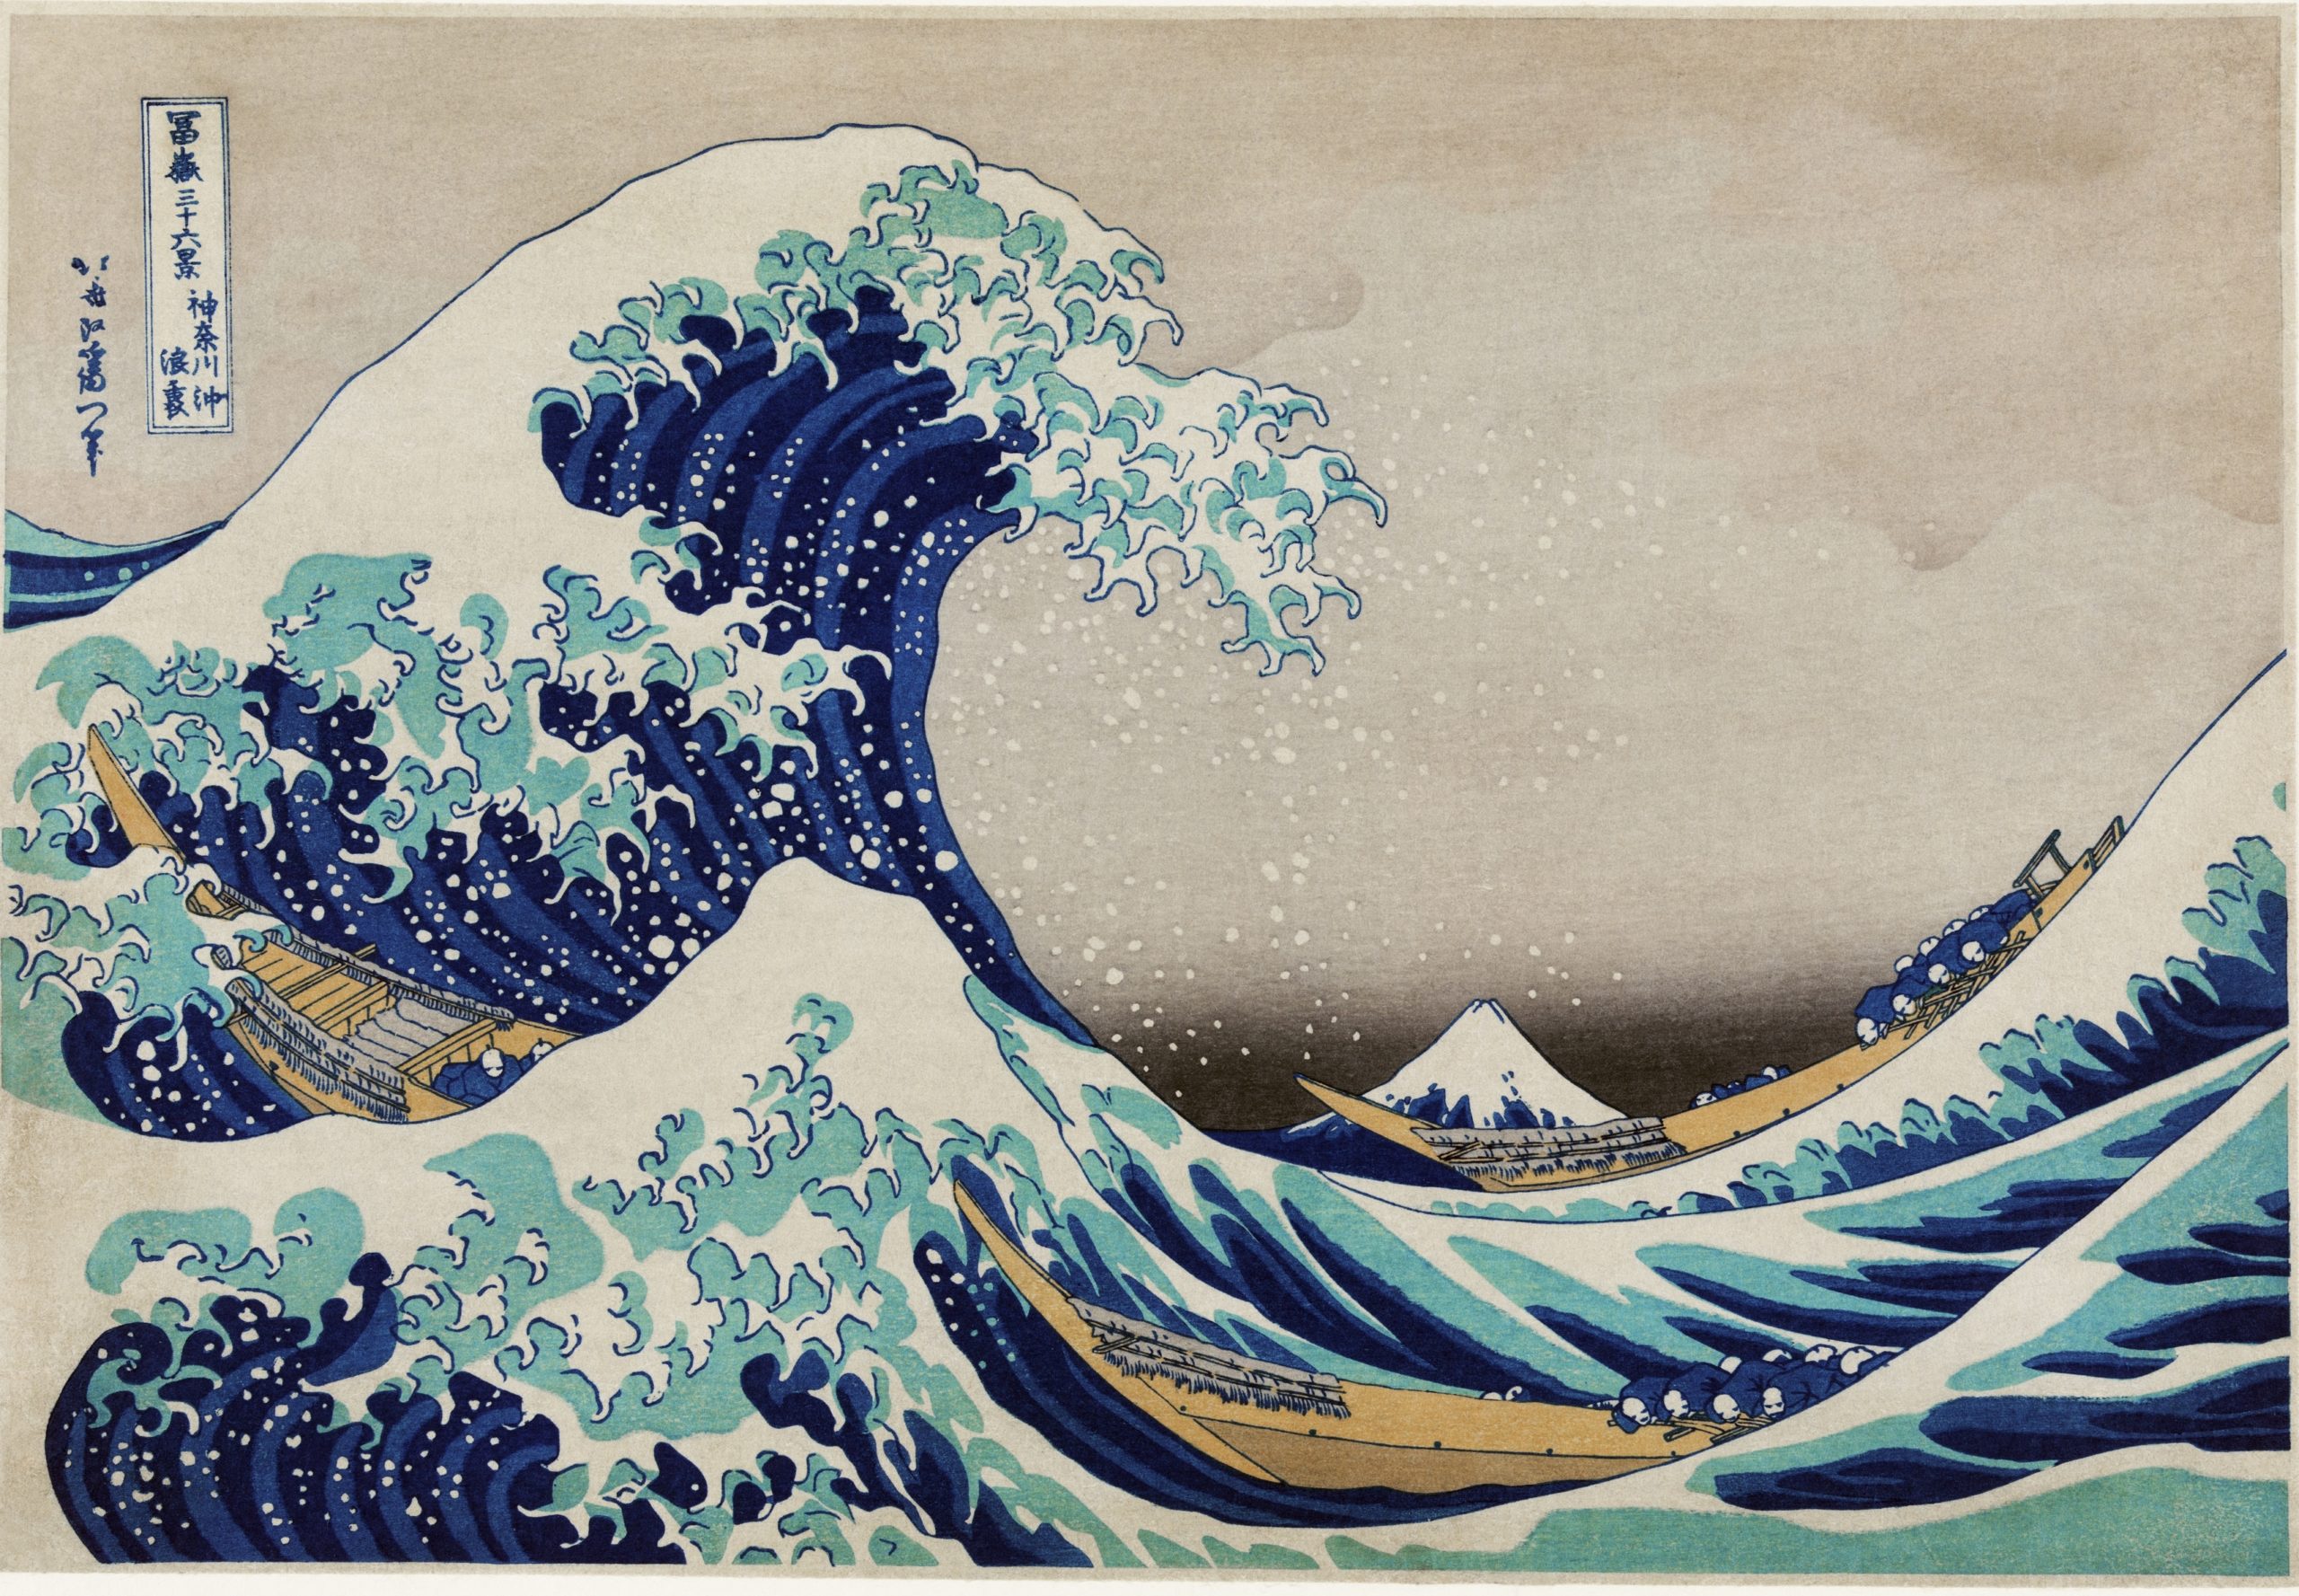 Katsushika Hokusai's The Great Wave off Kanagawa, famous vintage woodblock print for wall art and poster.